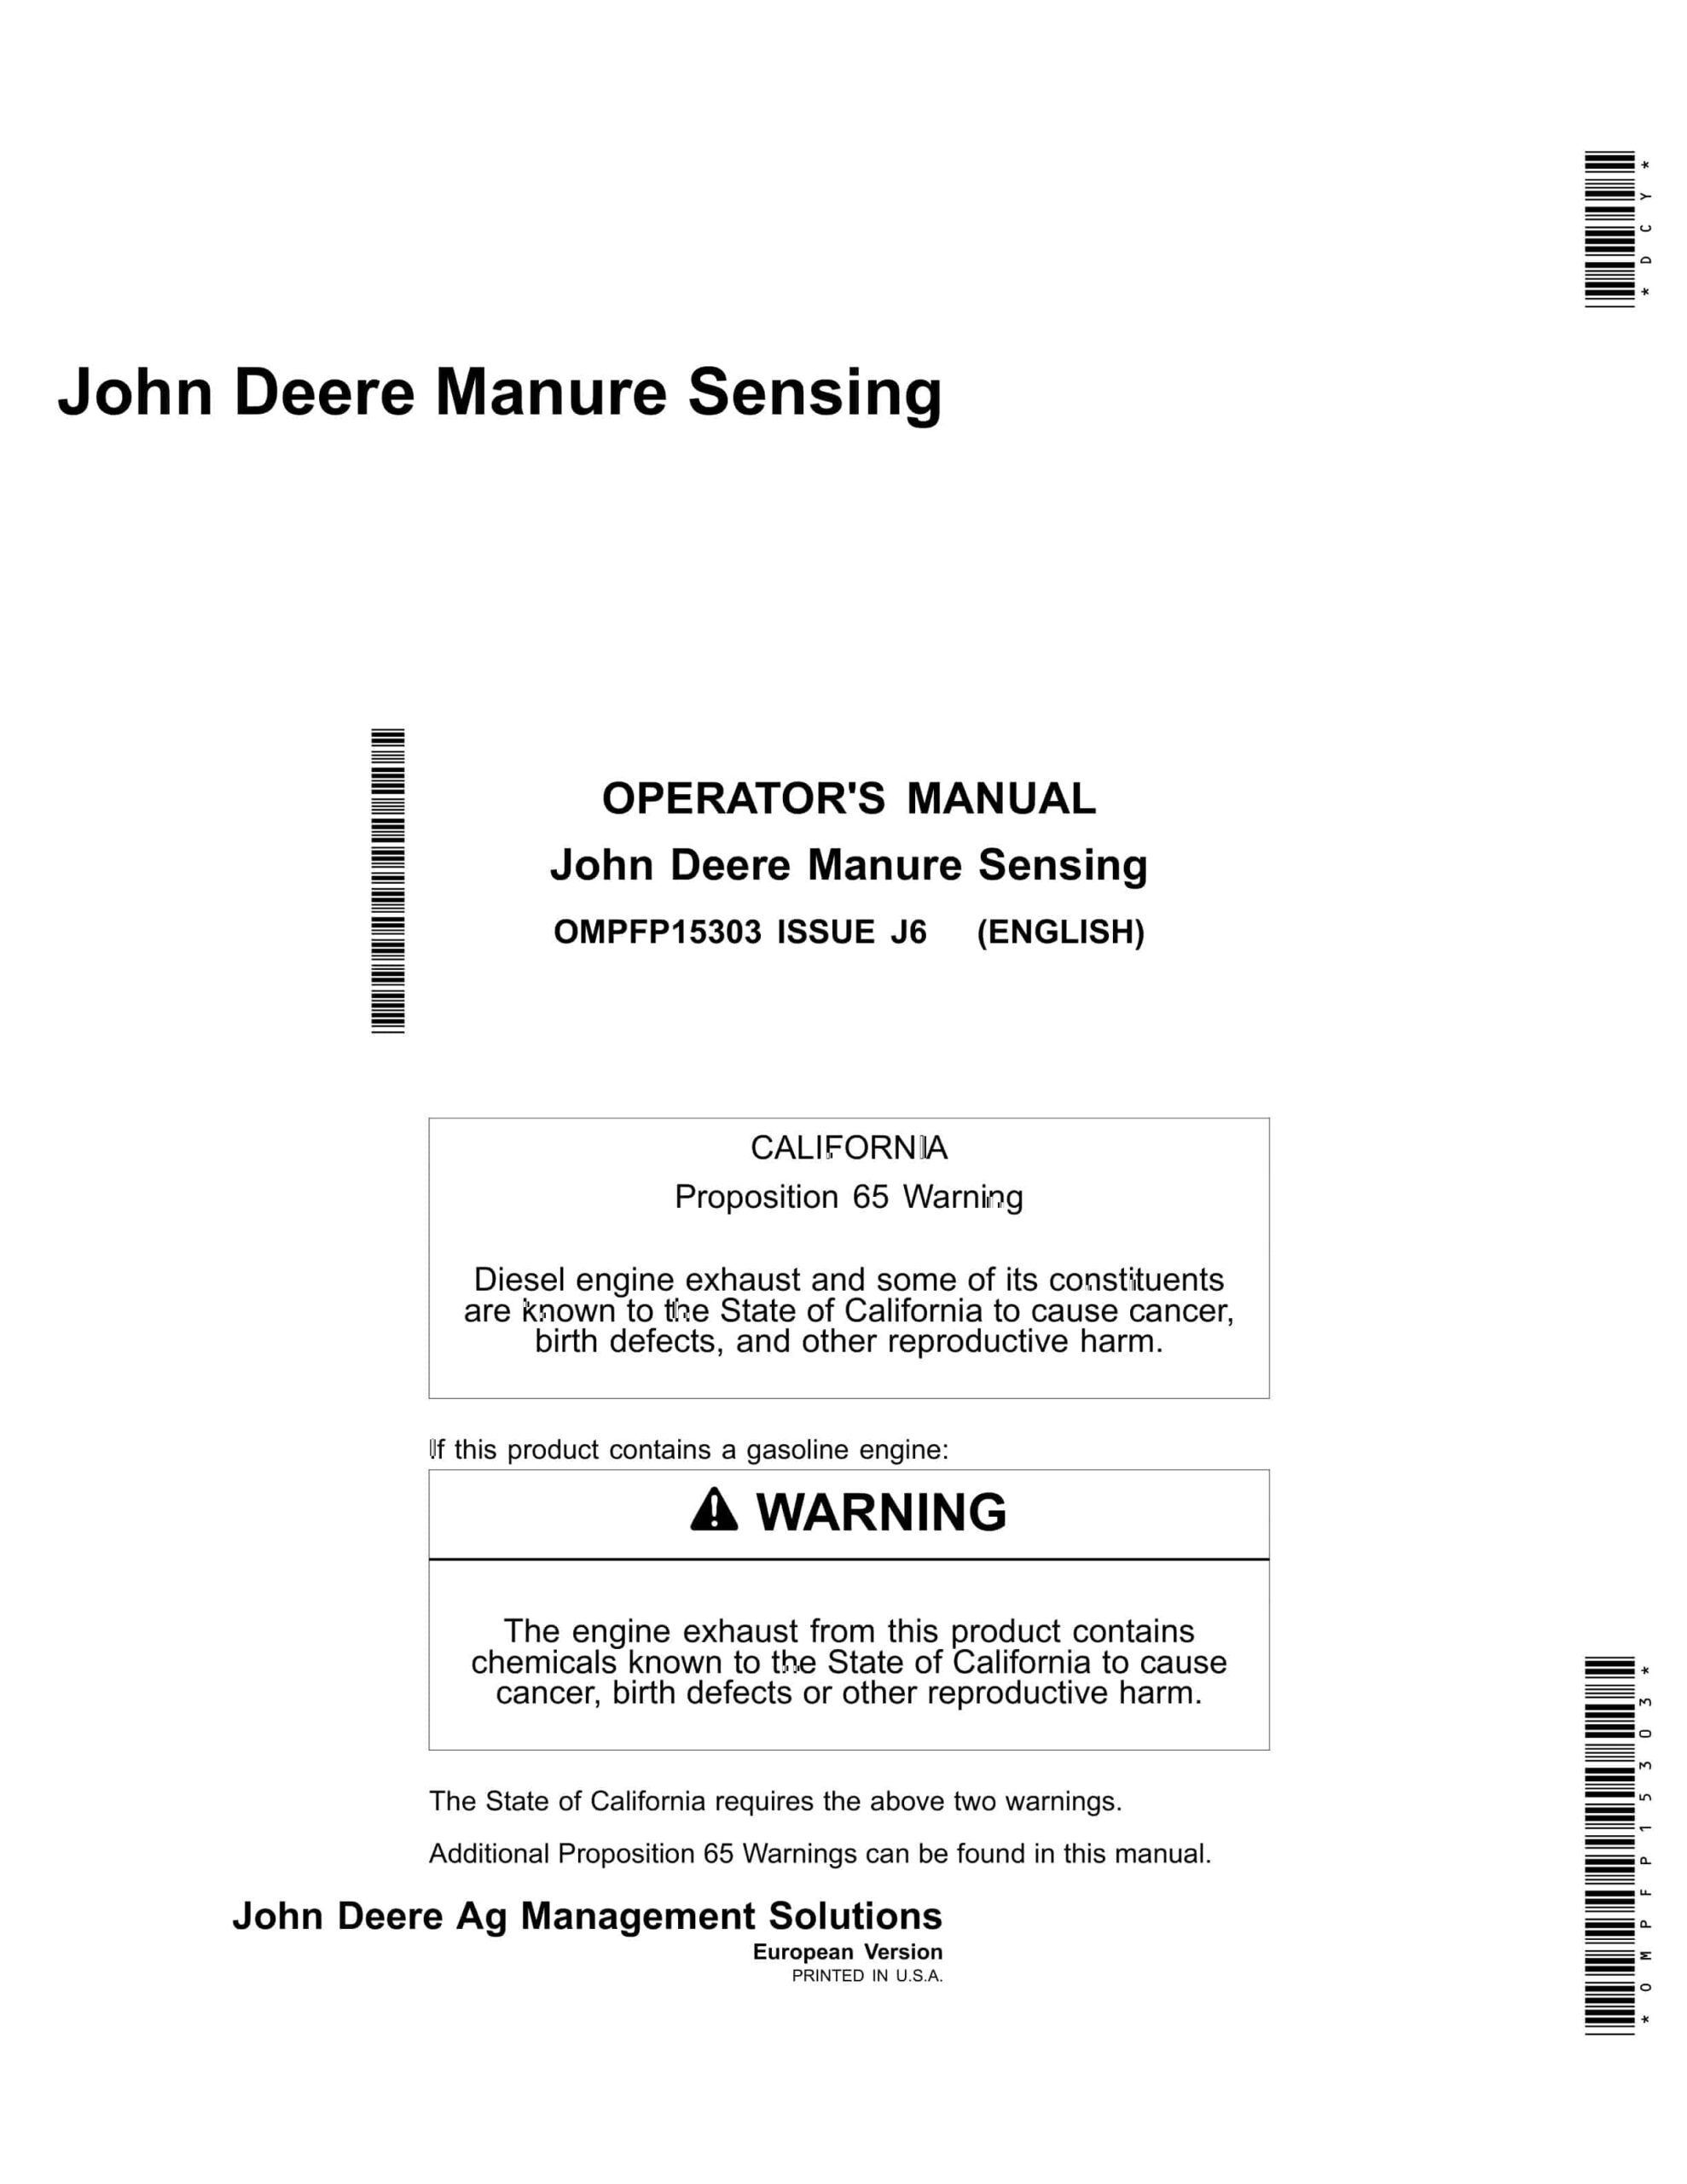 John Deere Manure Sensing Operator Manual OMPFP15303-1